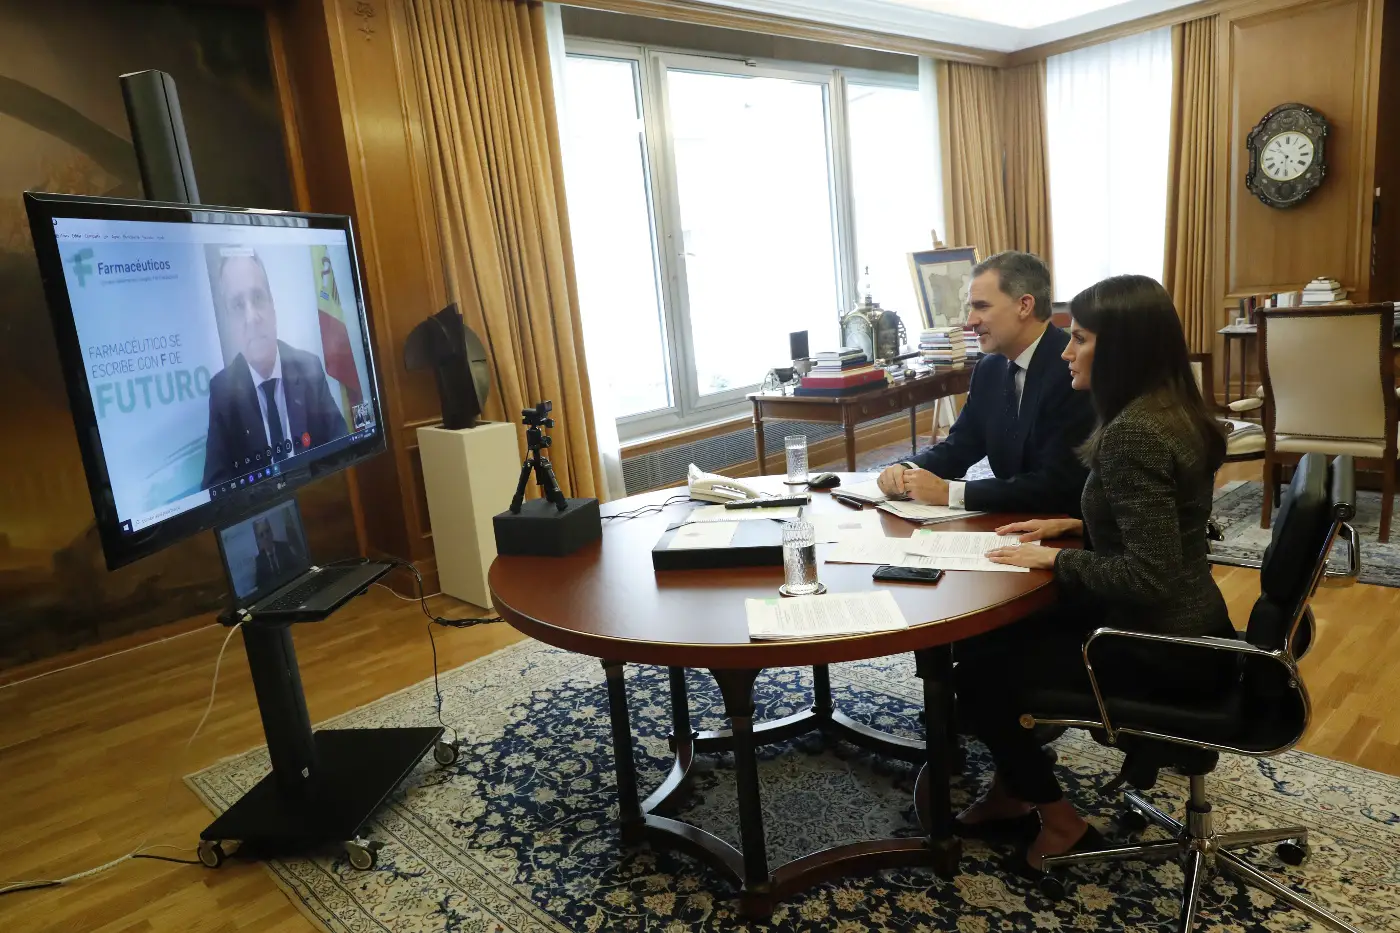 Felipe and Letizia held virtual meetings